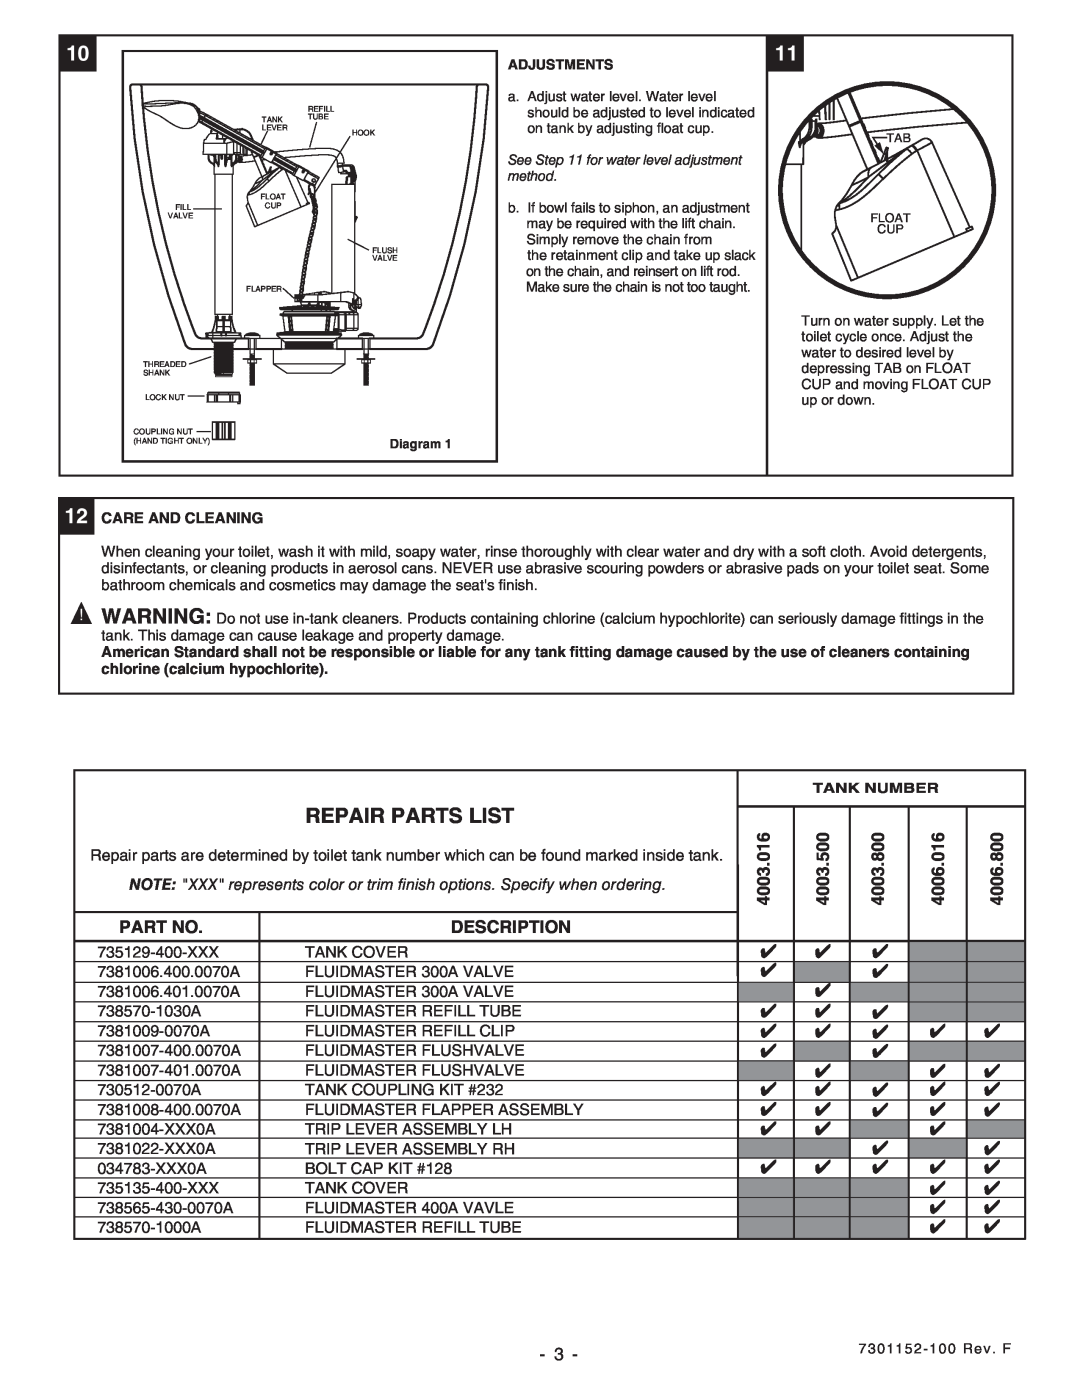 American Standard 3510, 2453, 2487, 2485 Repair Parts List, Description, 4003.016, 4003.500, 4003.800, 4006.016, 4006.800 